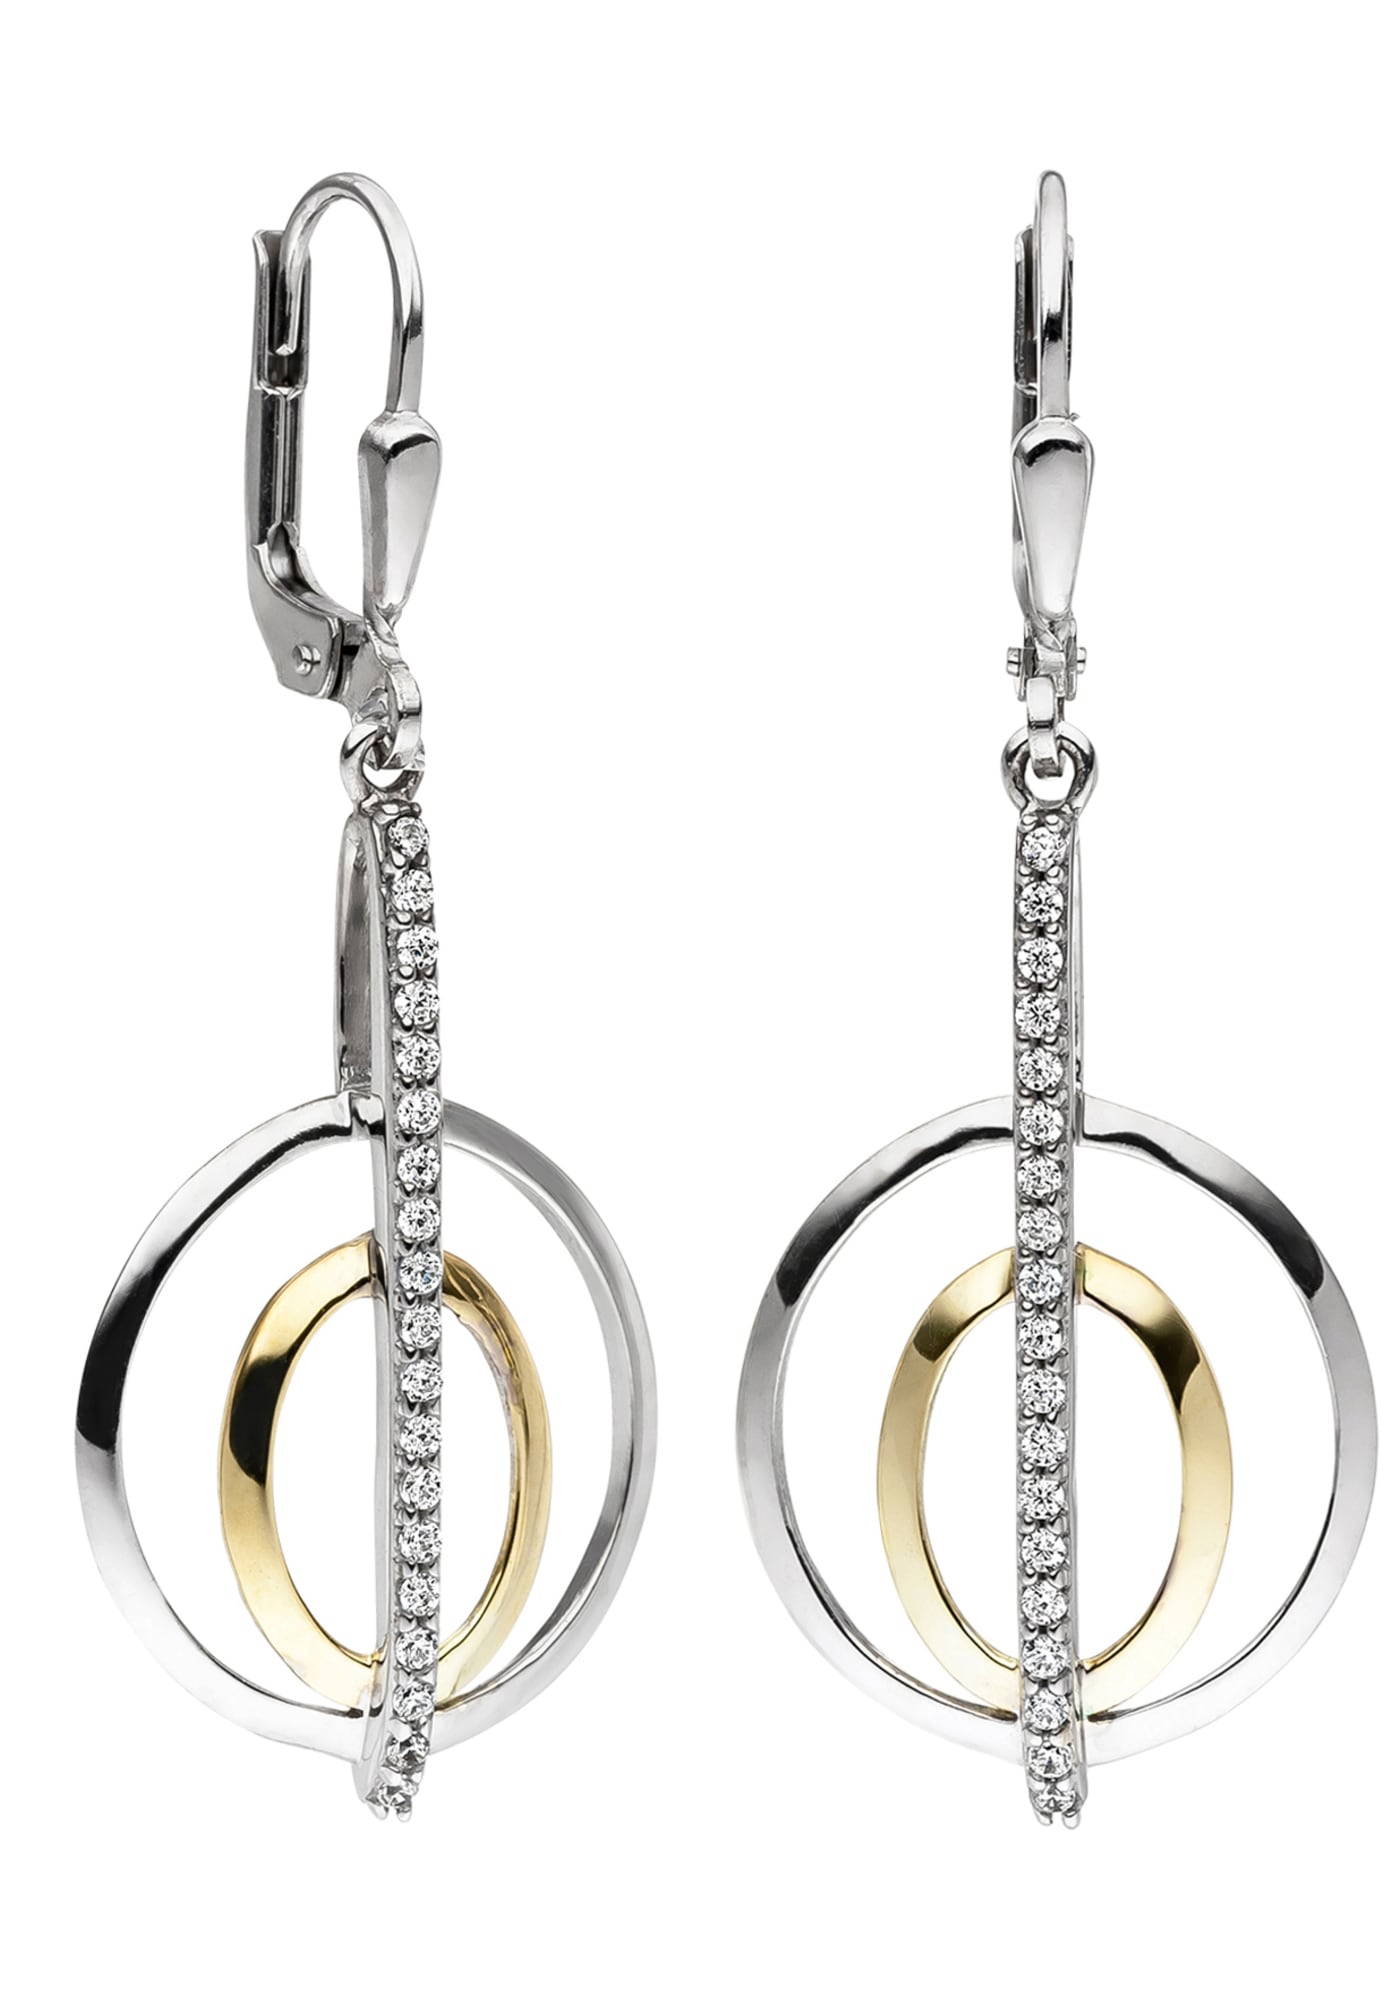 JOBO Paar Ohrhänger »Ohrringe mit 38 Zirkonia«, 925 Silber bicolor vergoldet